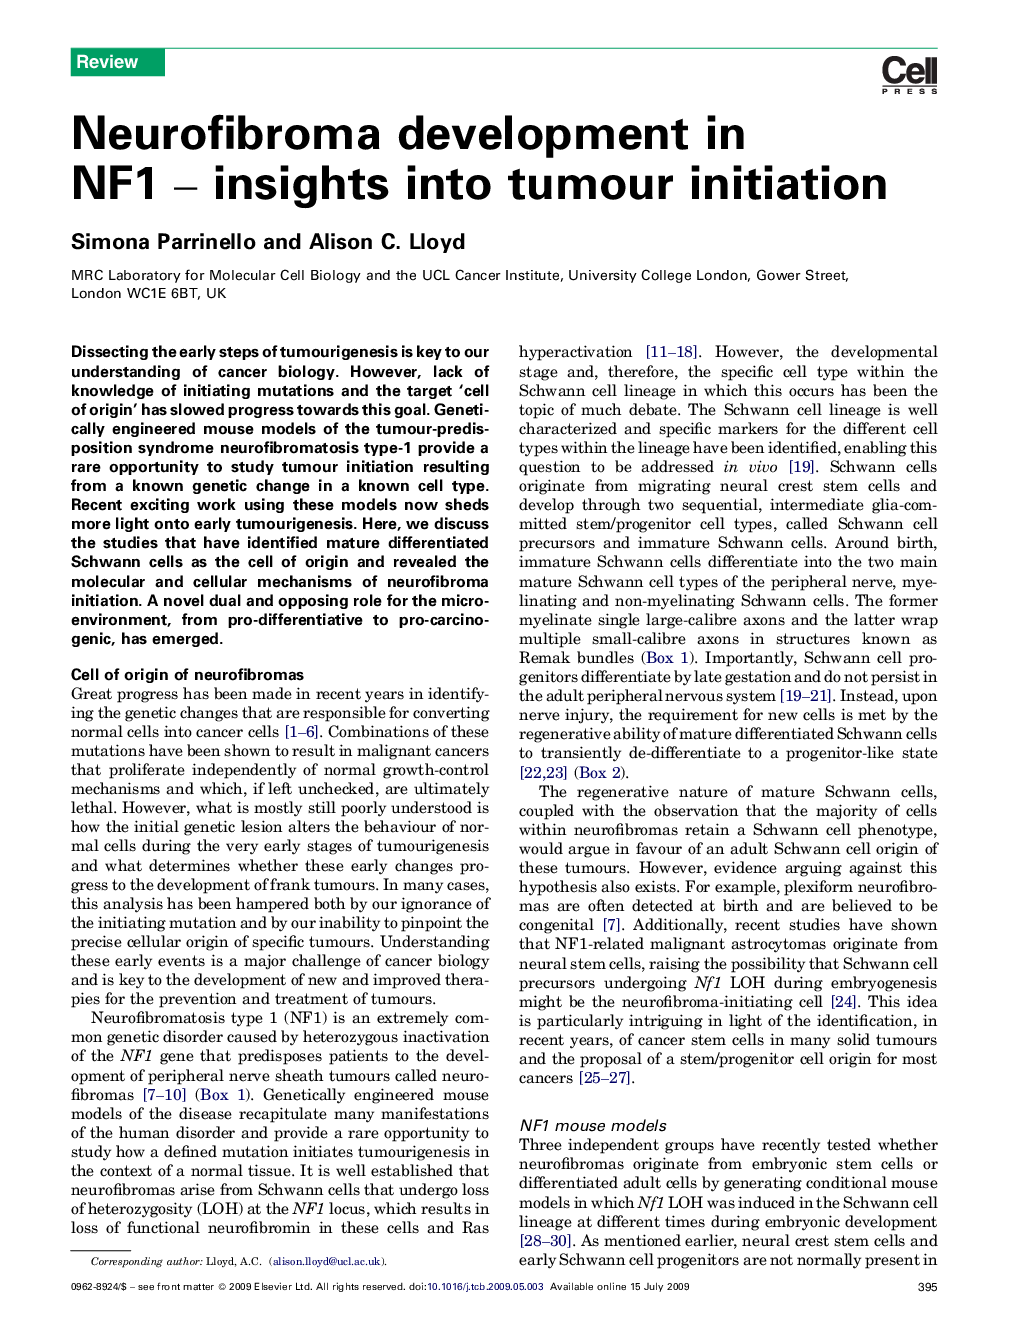 Neurofibroma development in NF1 – insights into tumour initiation